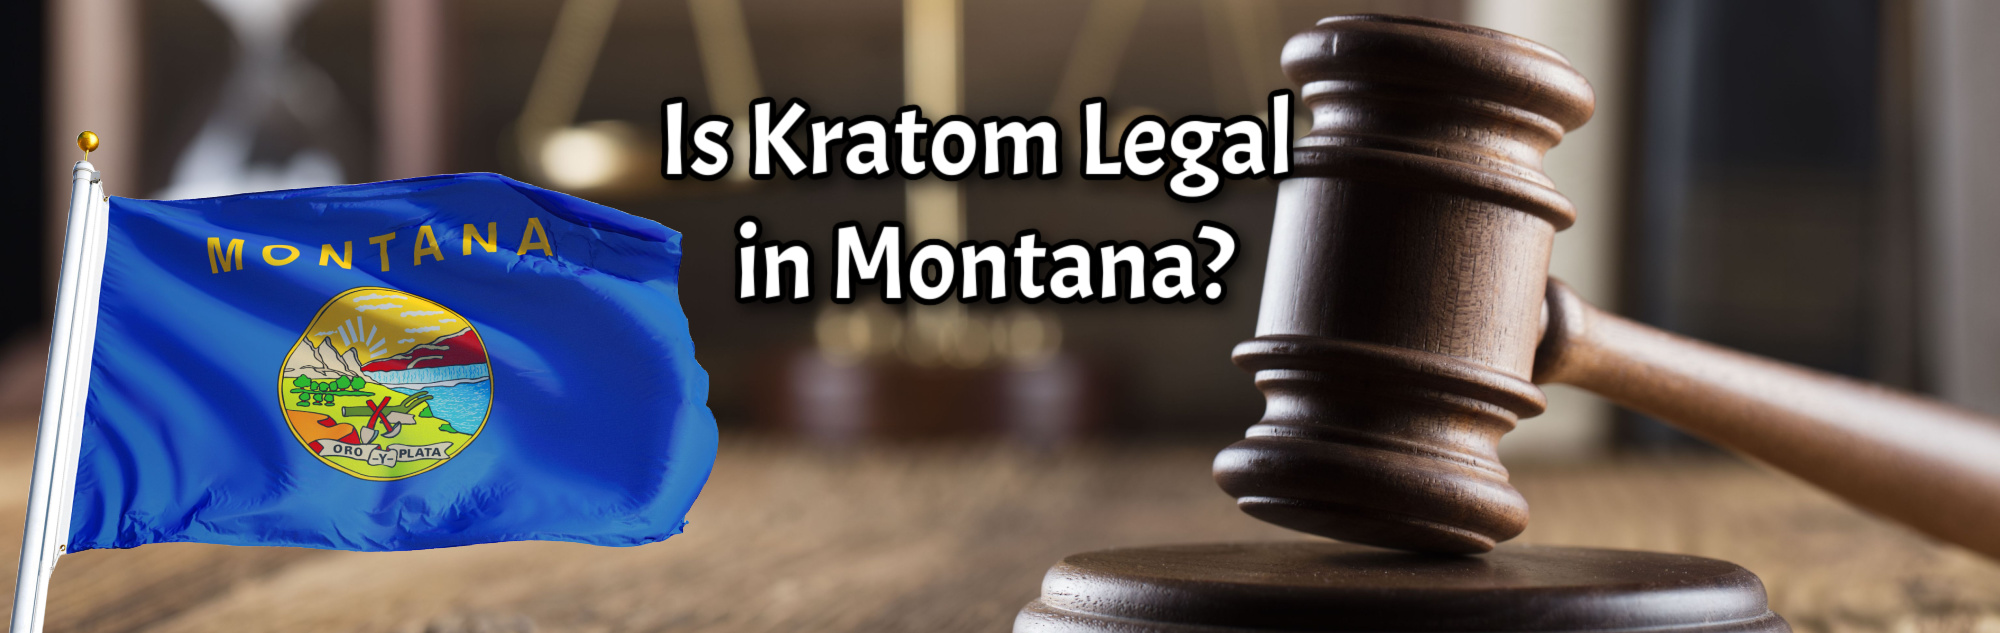 image of is kratom legal in montana